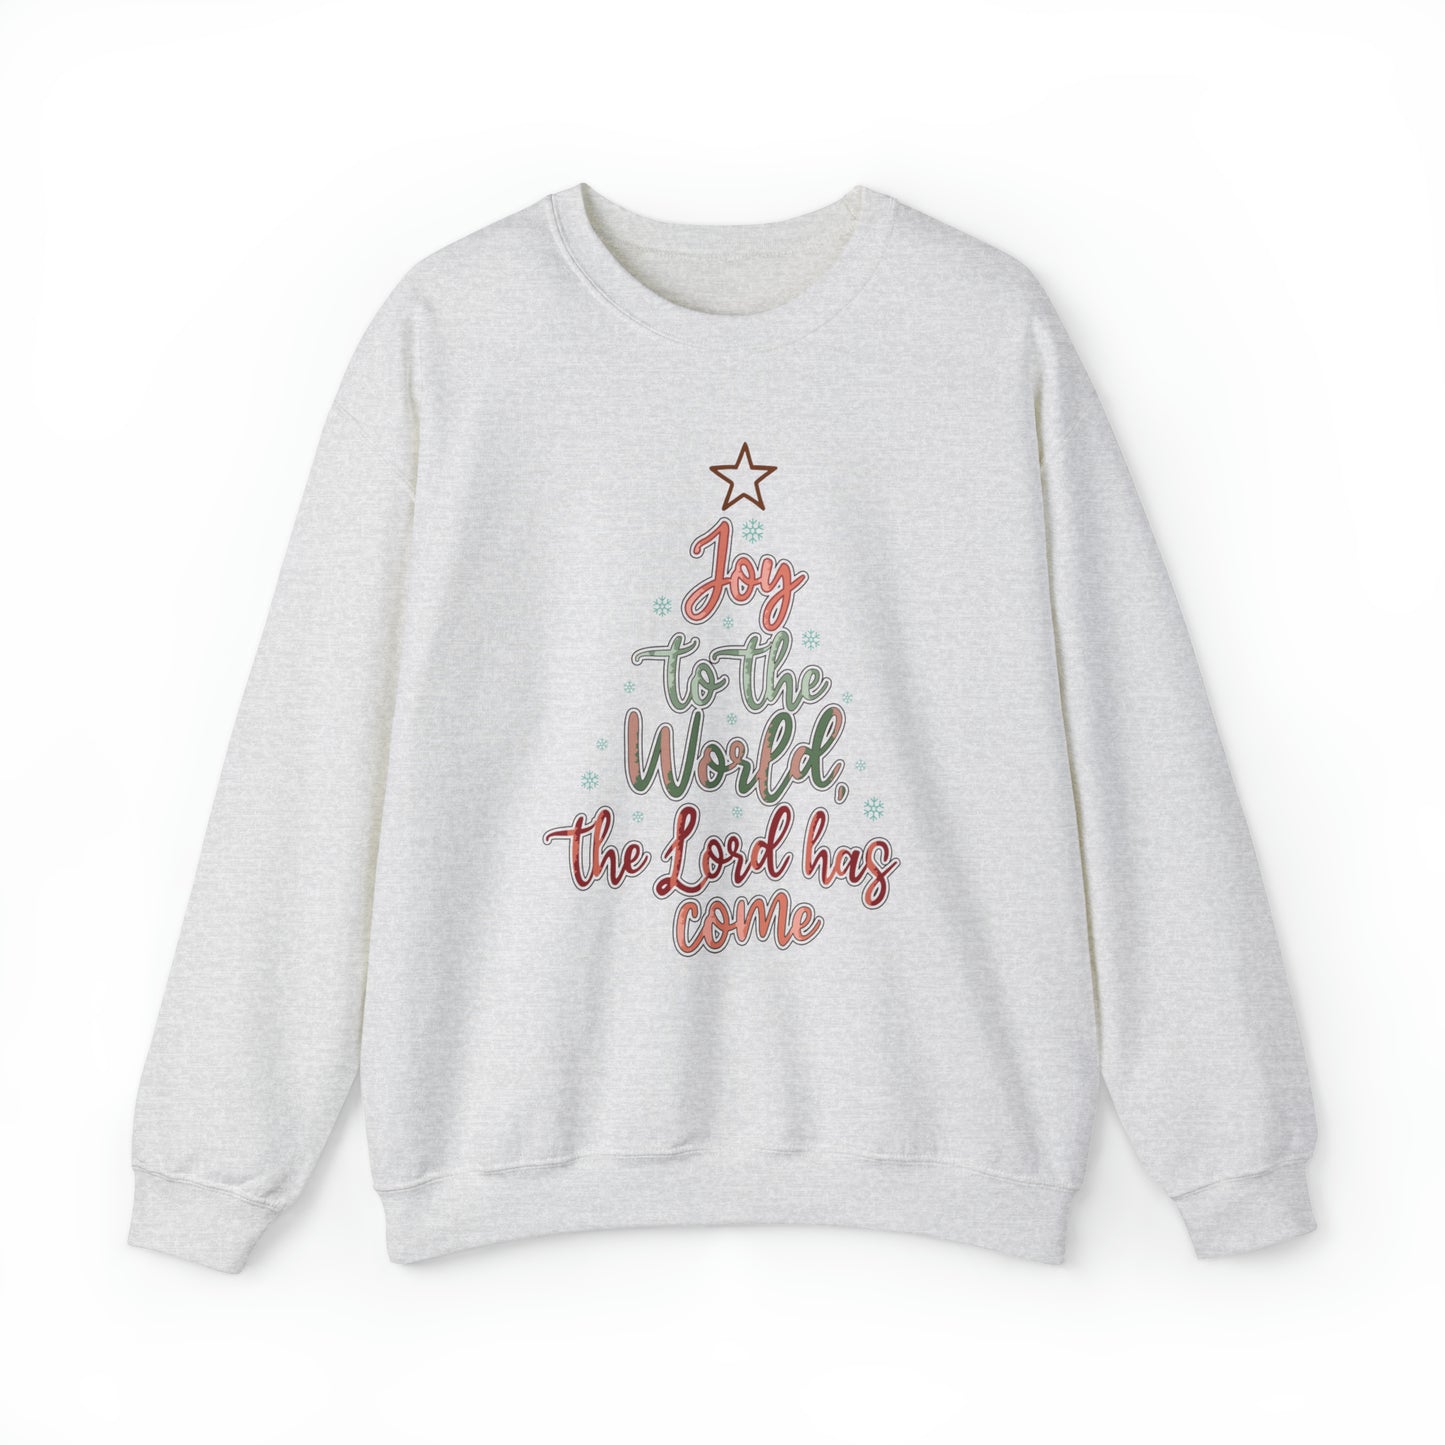 Joy to the world Women's Christmas Sweatshirt